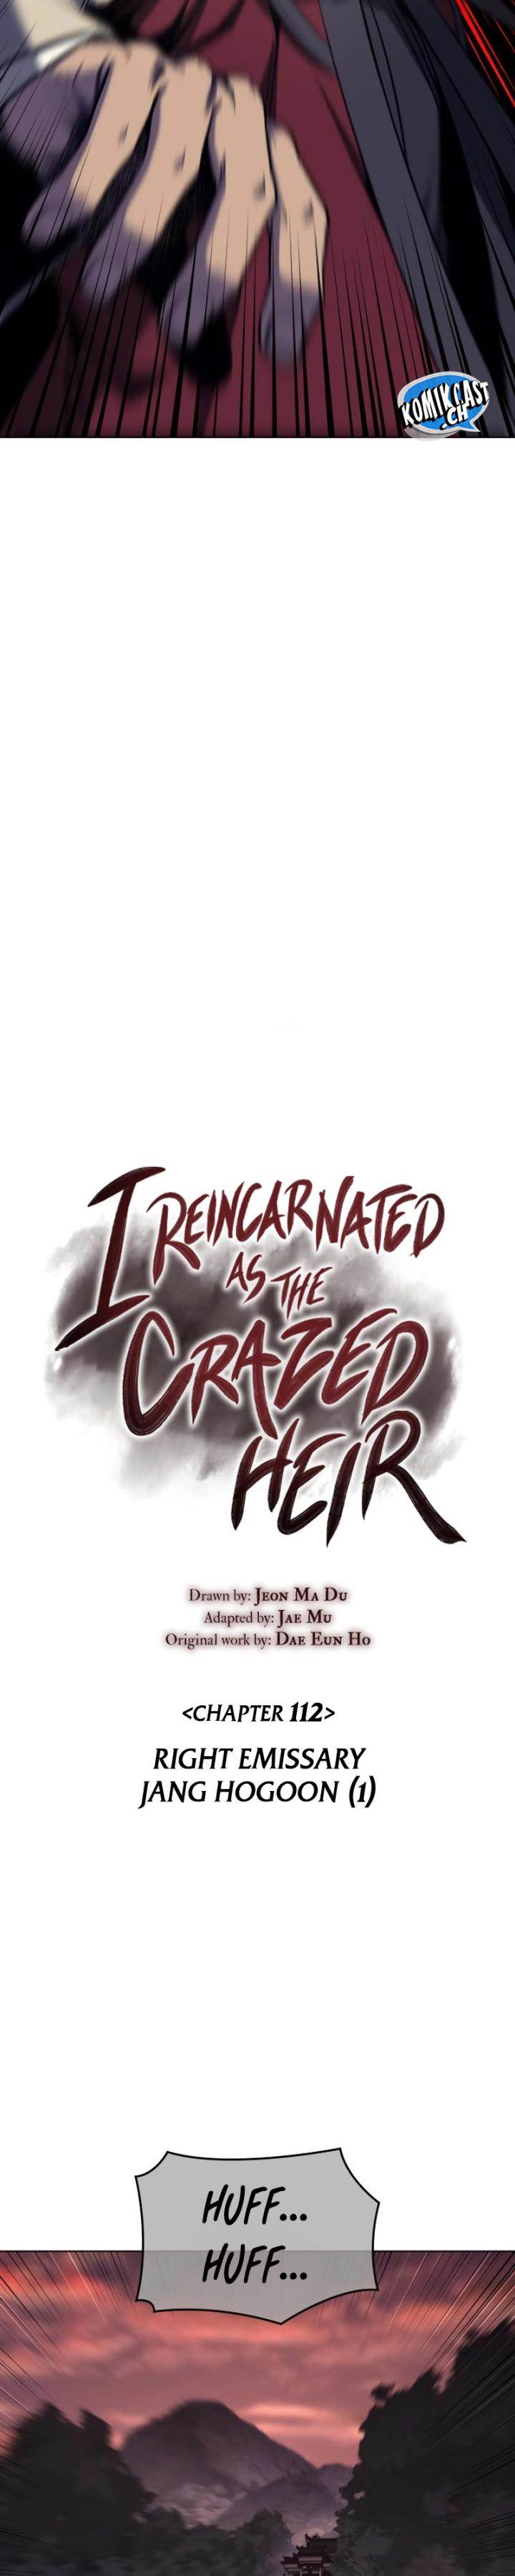 I Reincarnated As The Crazed Heir Chapter 112